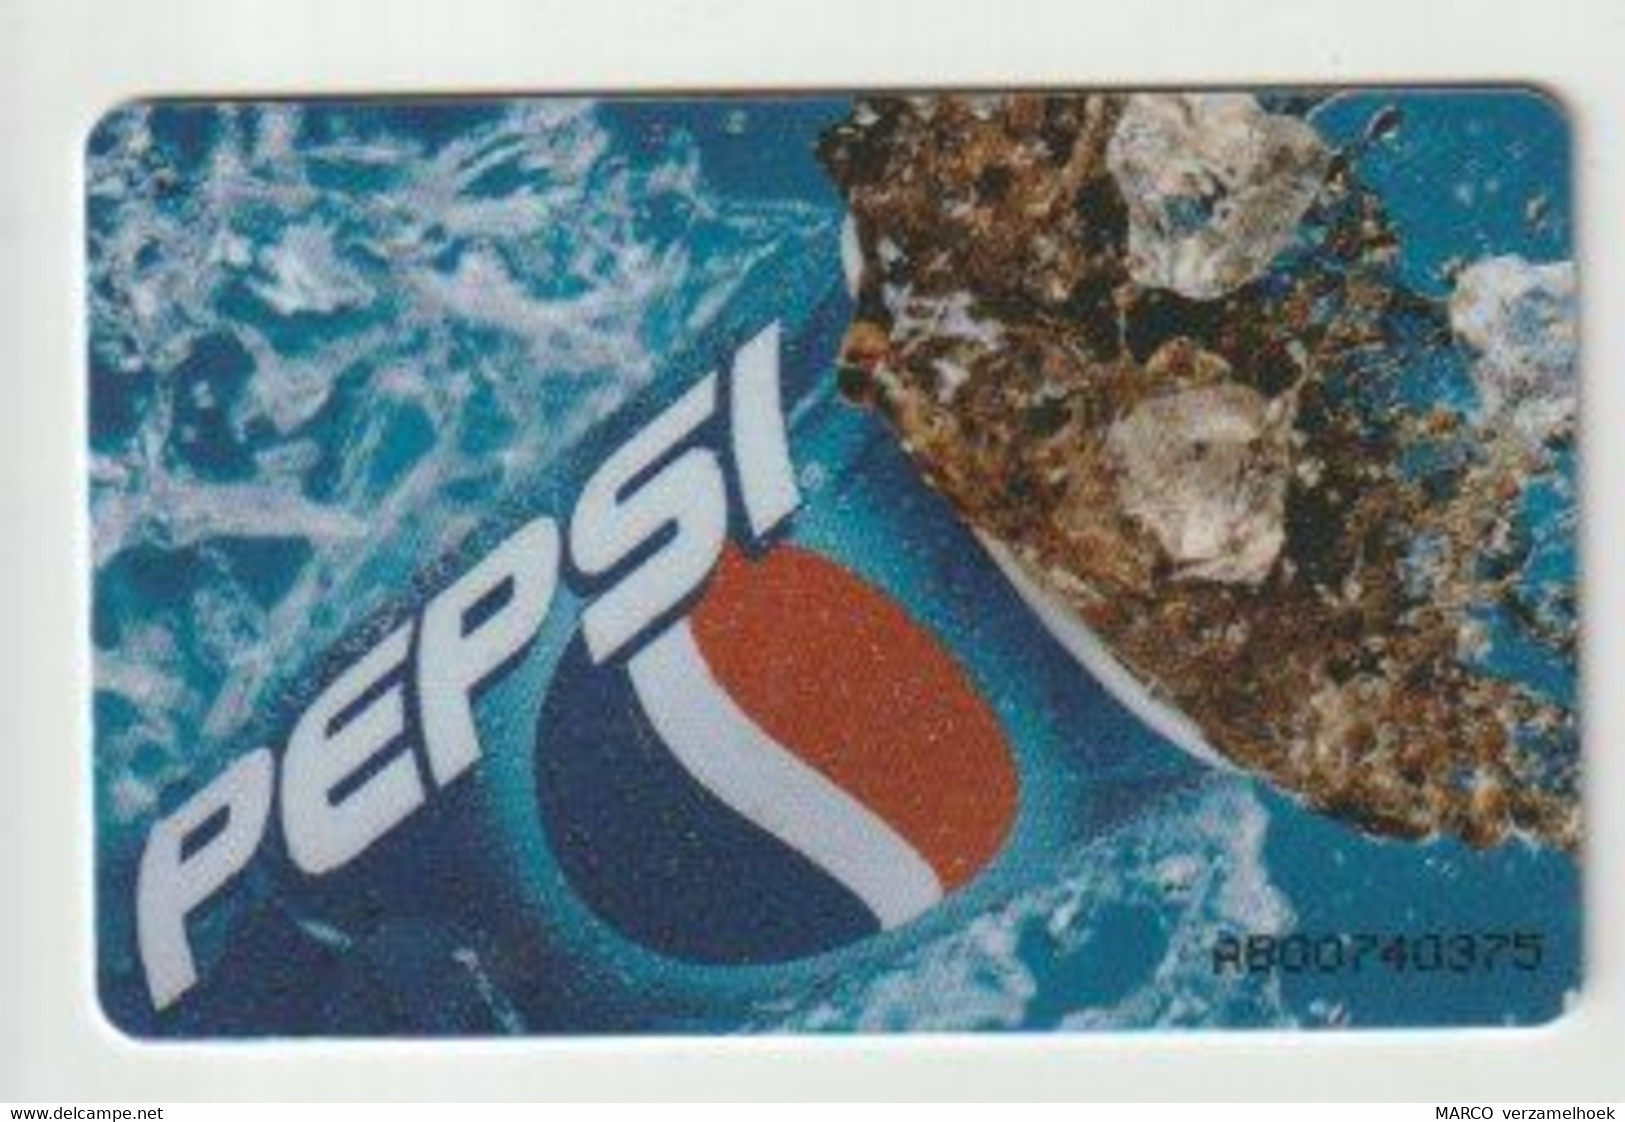 OHRA-card Gelredome Arnhem (NL) Vitesse-pepsi Cola 2001 - Non Classificati